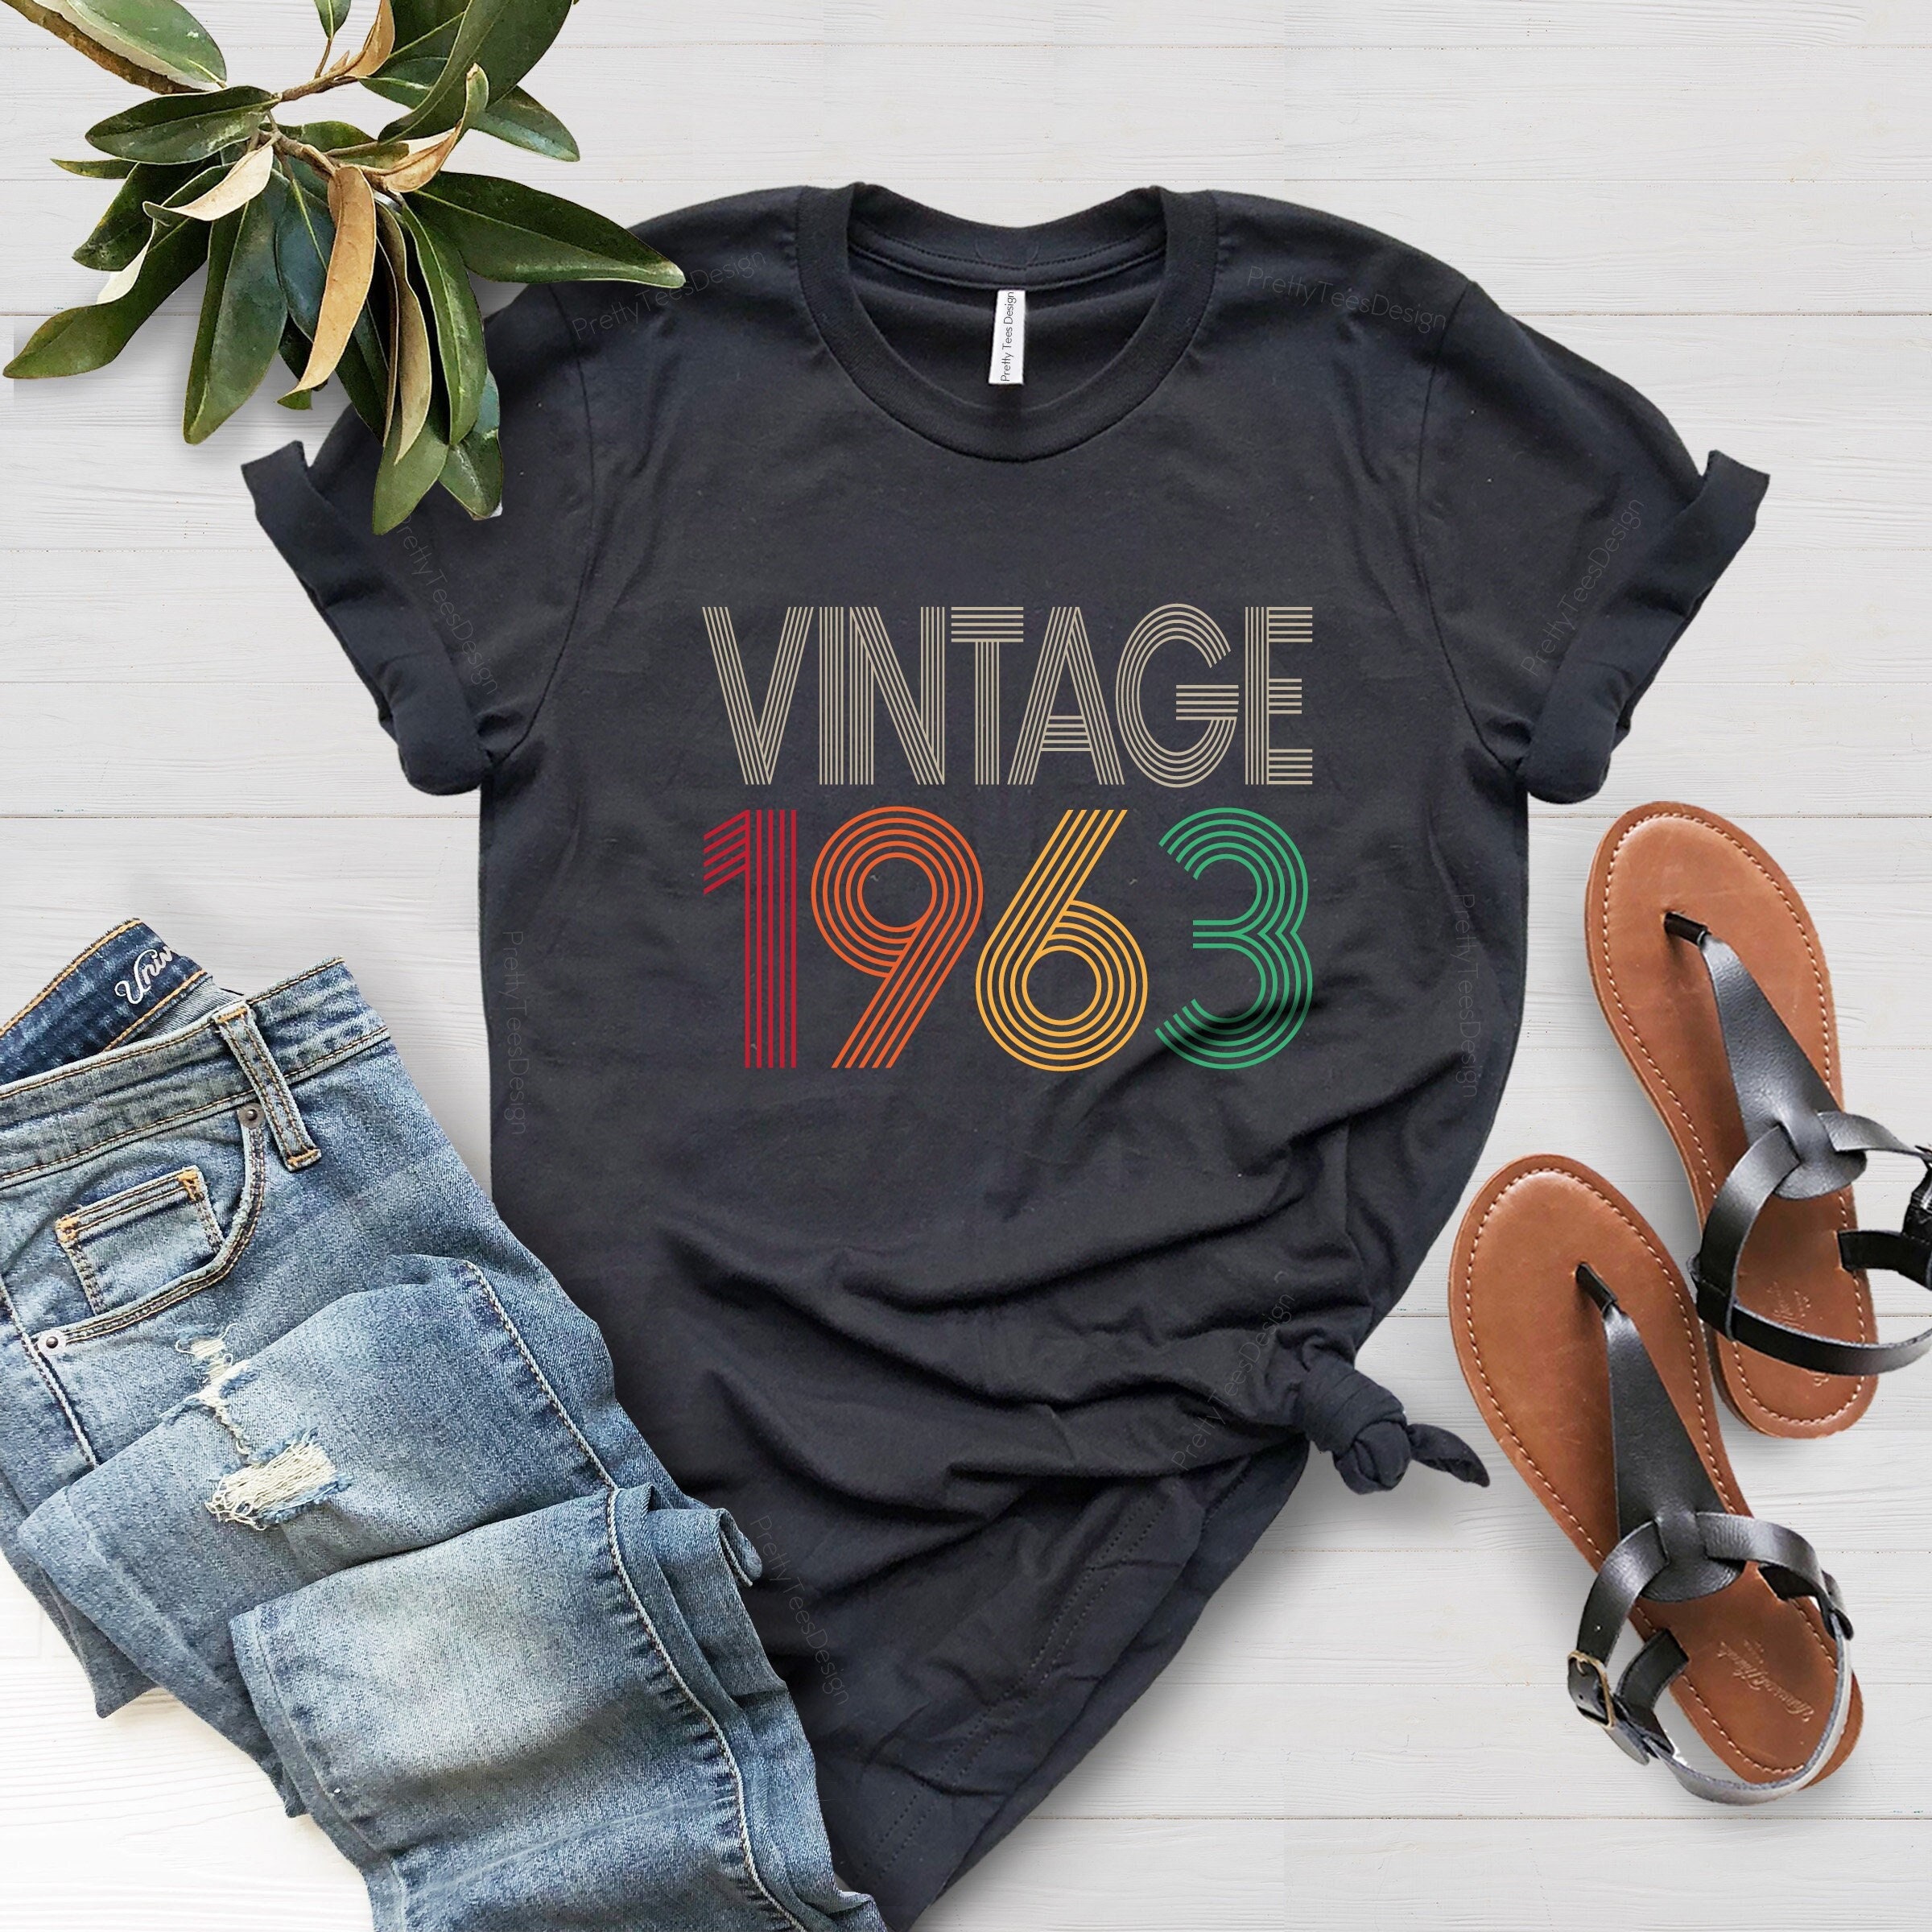 Discover 60th Birthday Shirt, Vintage 1963 Shirt, 60th Birthday Gift For Women, 60th Birthday Gift For Men, 60th Birthday Friend, 60th Birthday Woman